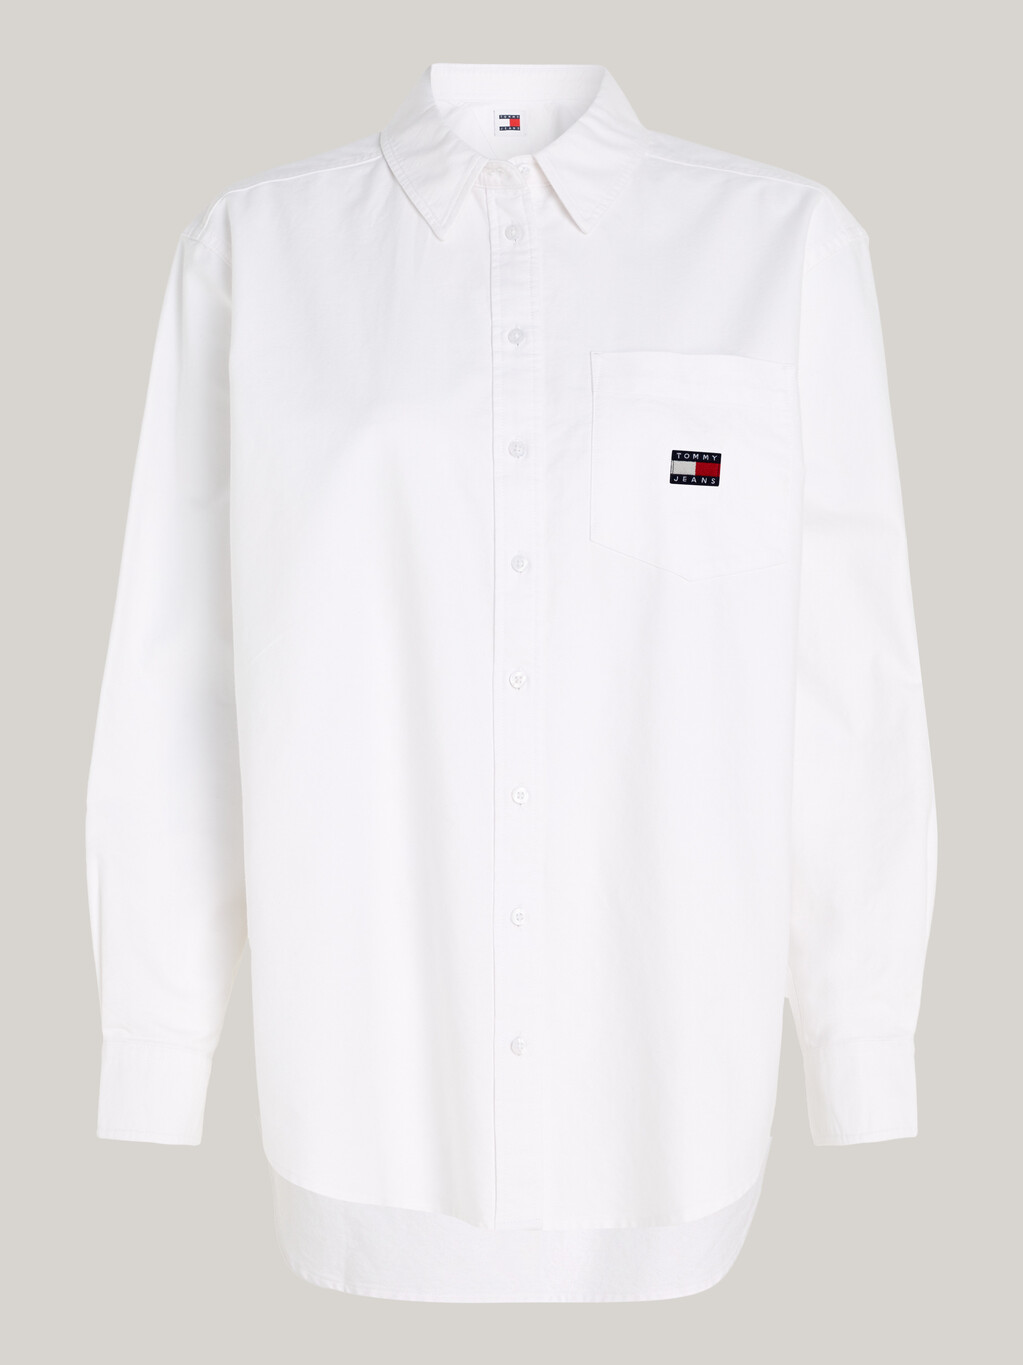 Badge Patch Pocket Boyfriend Oxford Shirt, White, hi-res